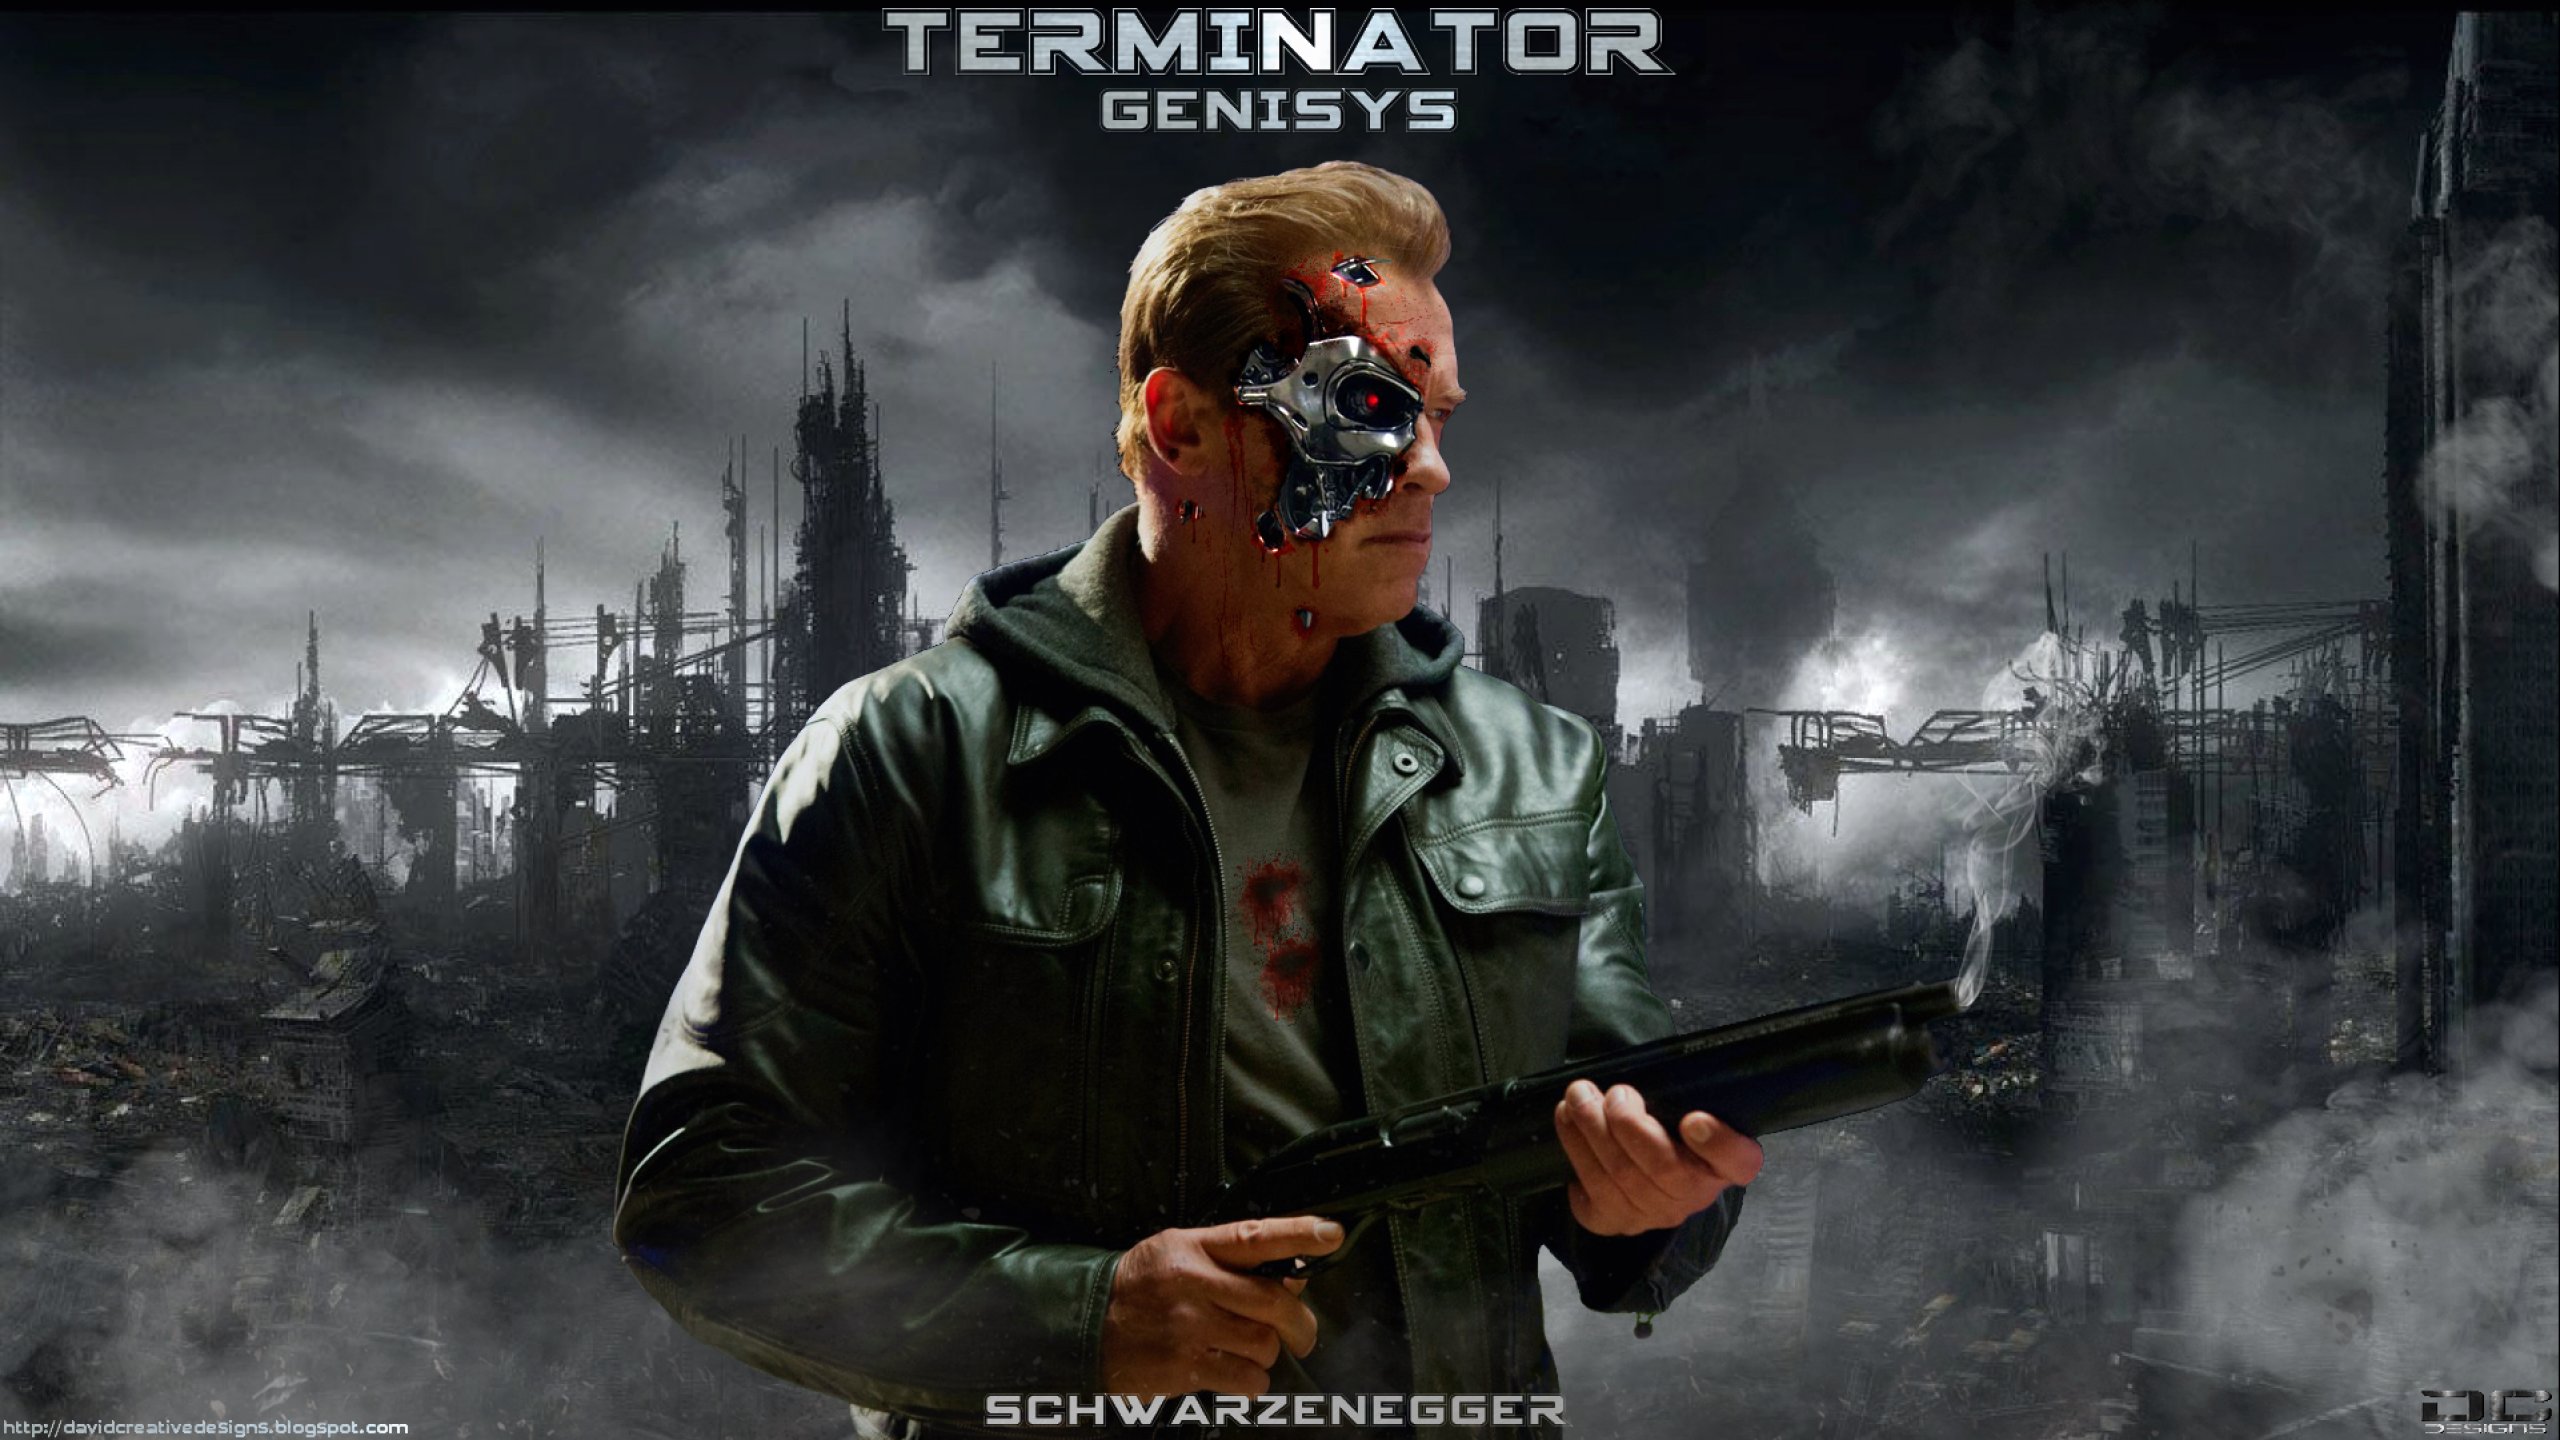 terminator, Genisys, Sci fi, Futuristic, Action, Fighting, Warrior, Robot, Cyborg, 1genisys, Poster Wallpaper